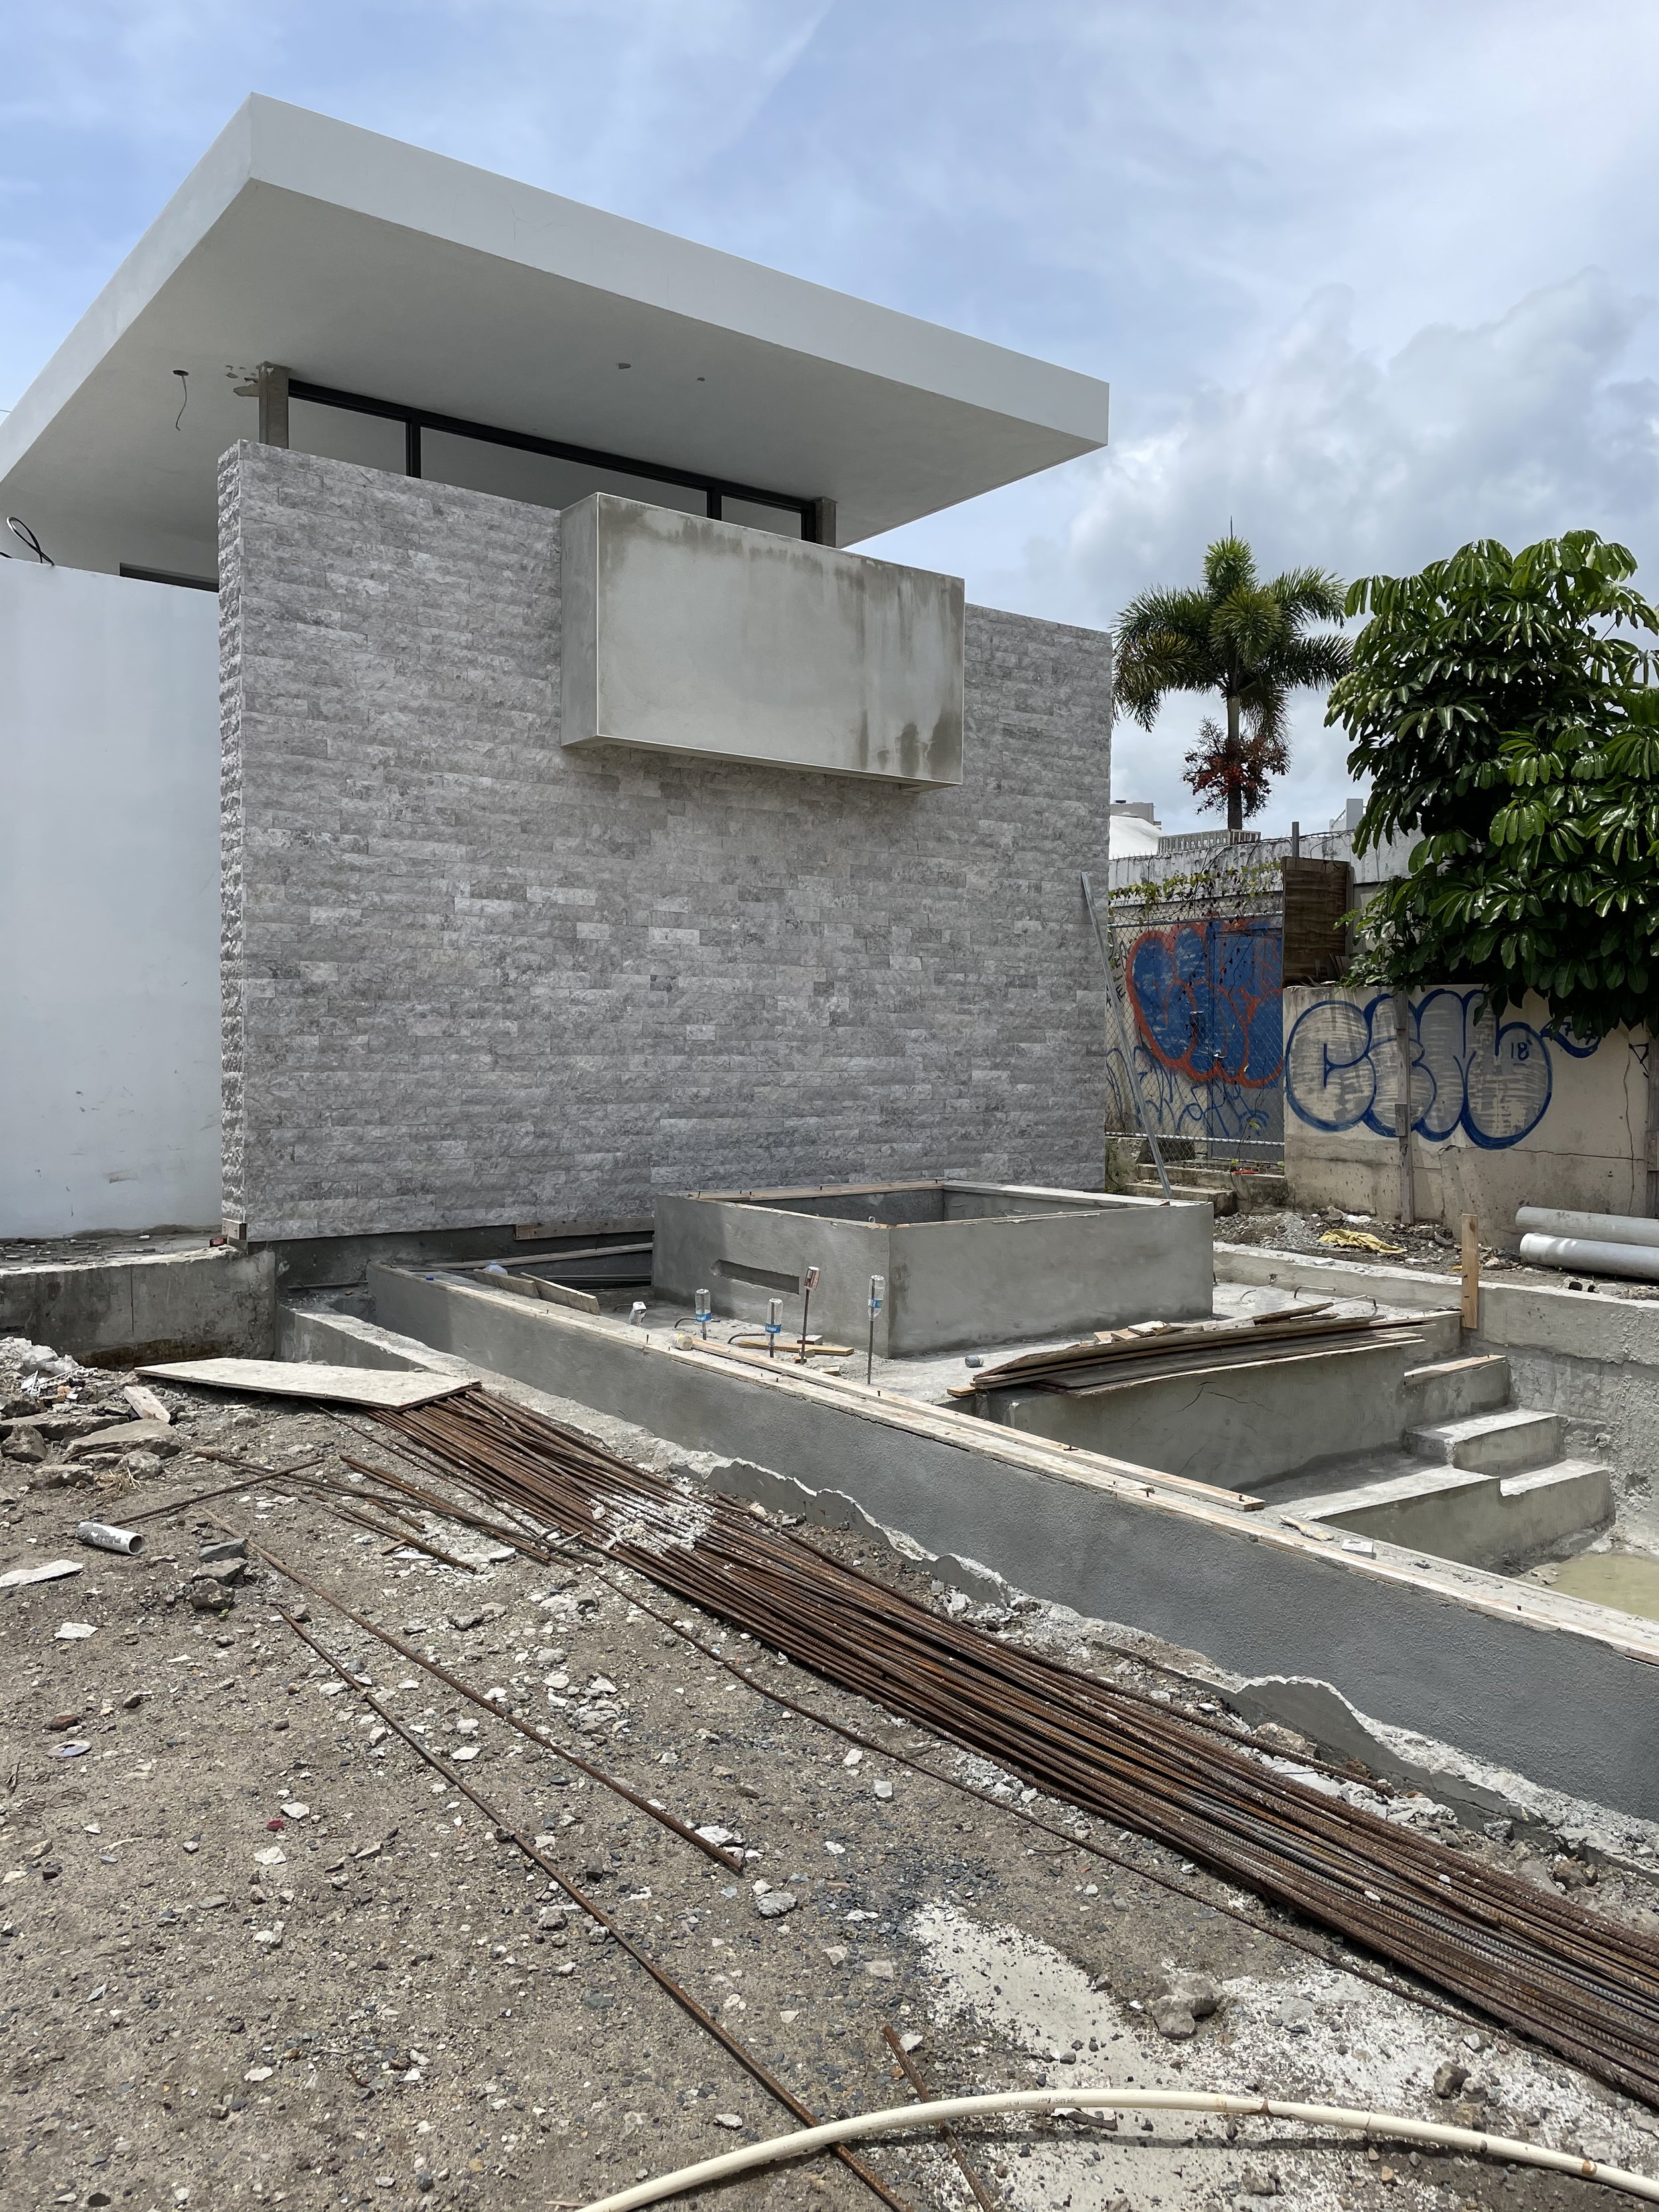  Exterior view of the Condado Residence construction. 